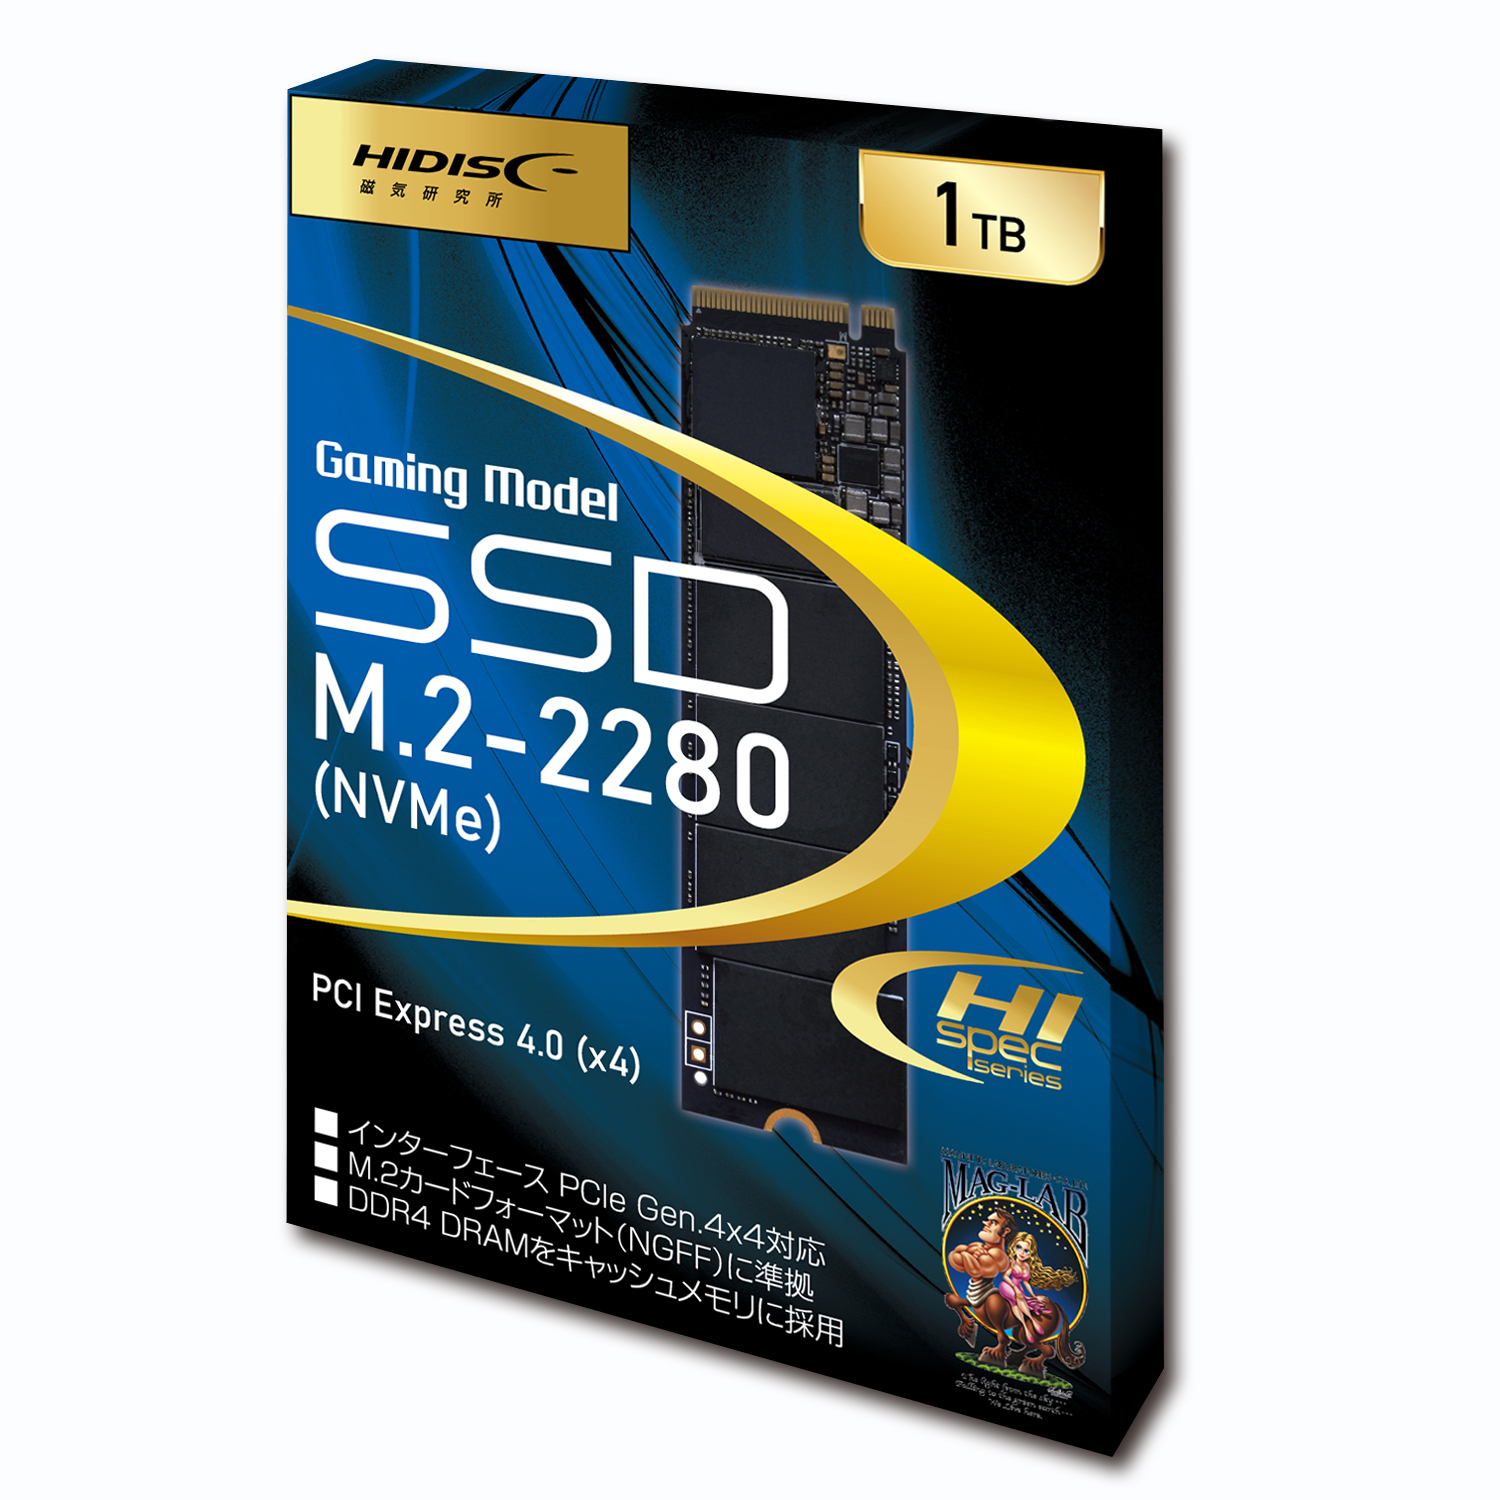 HIDISC Gaming Model SSD M.2-2280(NVMe) PCI Express4.0(x4) HDM2-E18-1TB